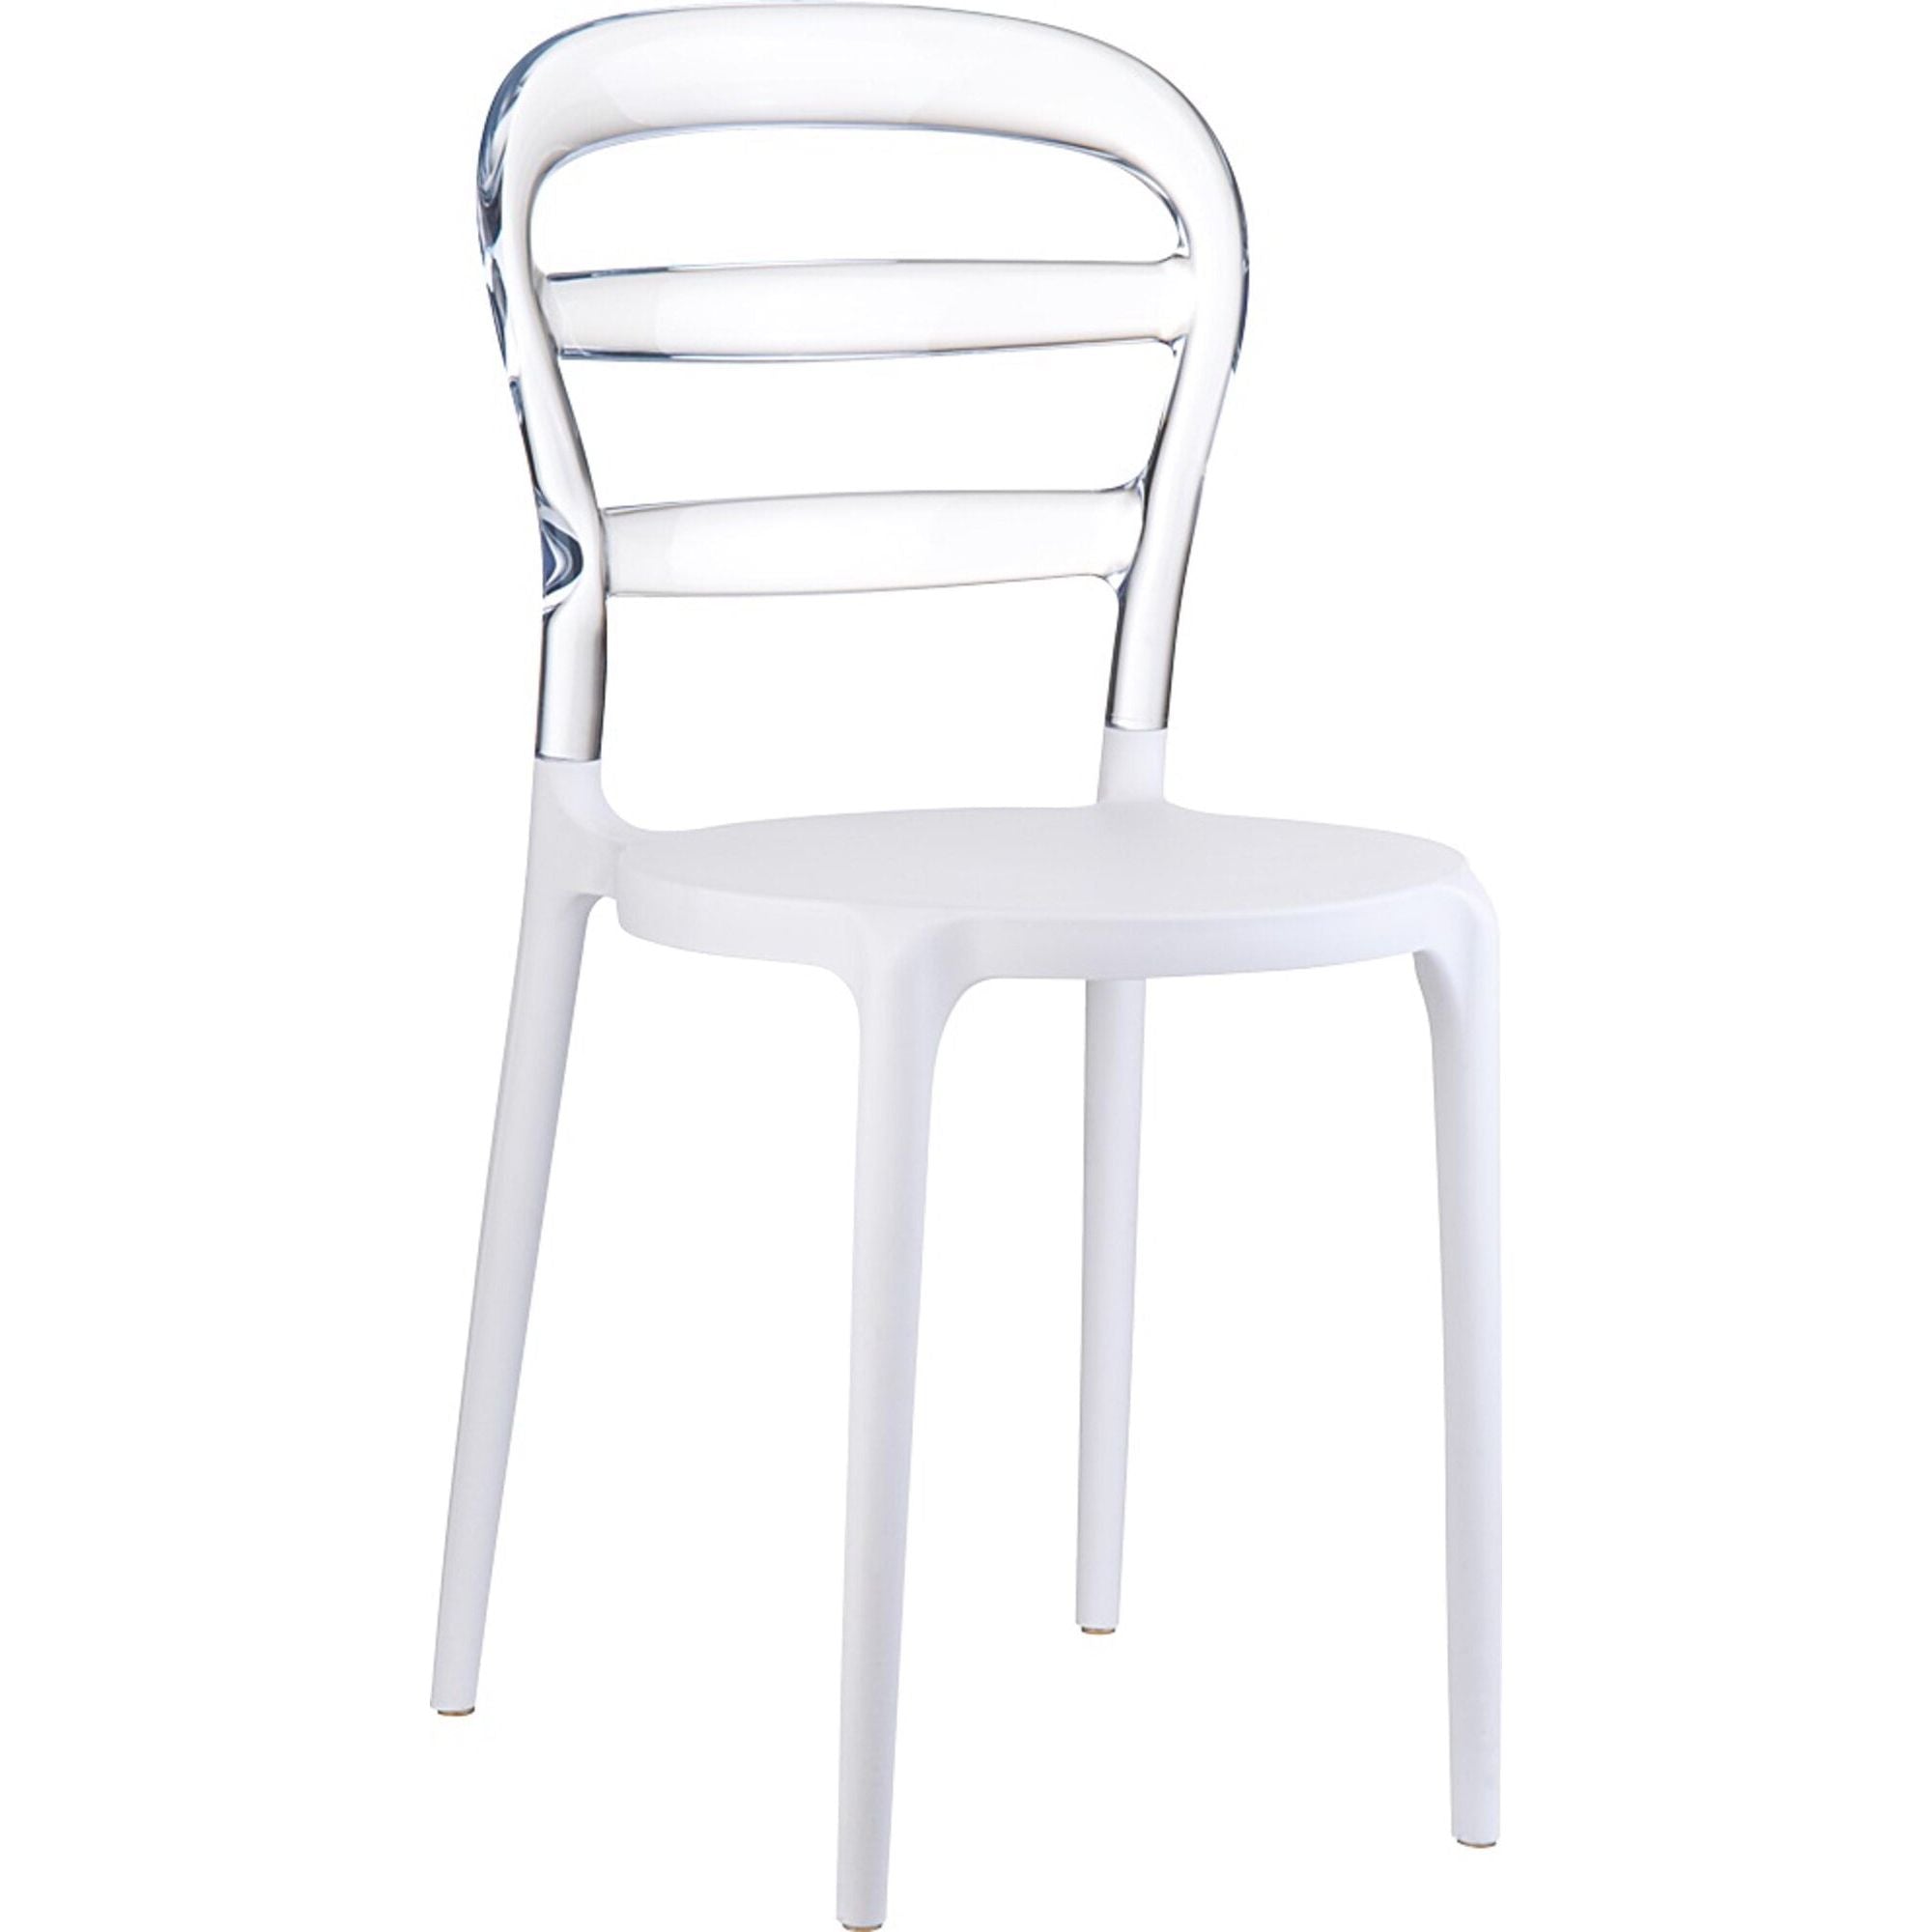 Garbar Bibi chair inside, outside transparent - white